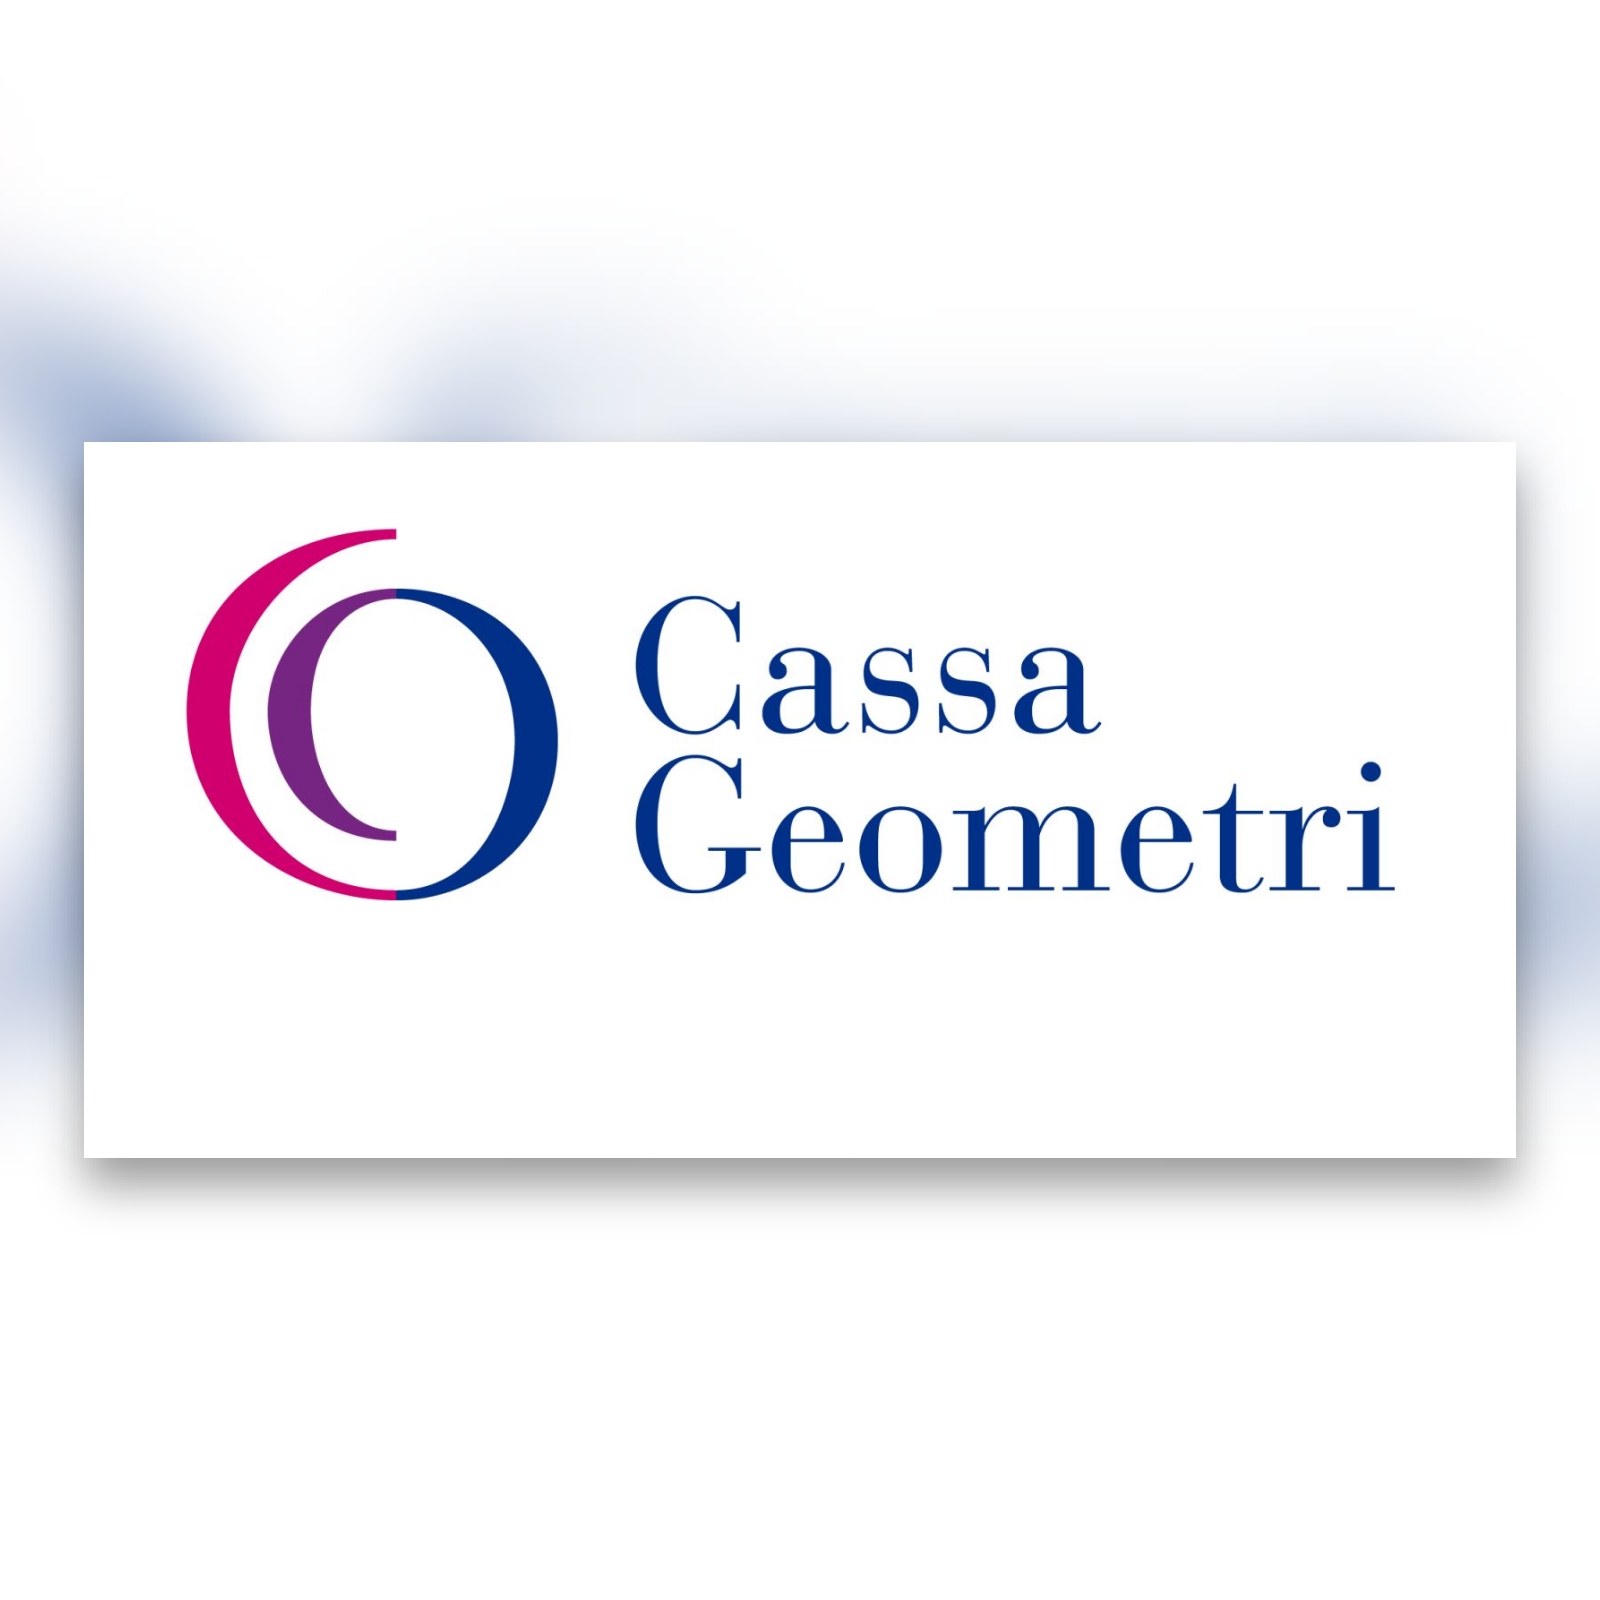 Cassa Geometri: Modifiche regolamentari – restyling.